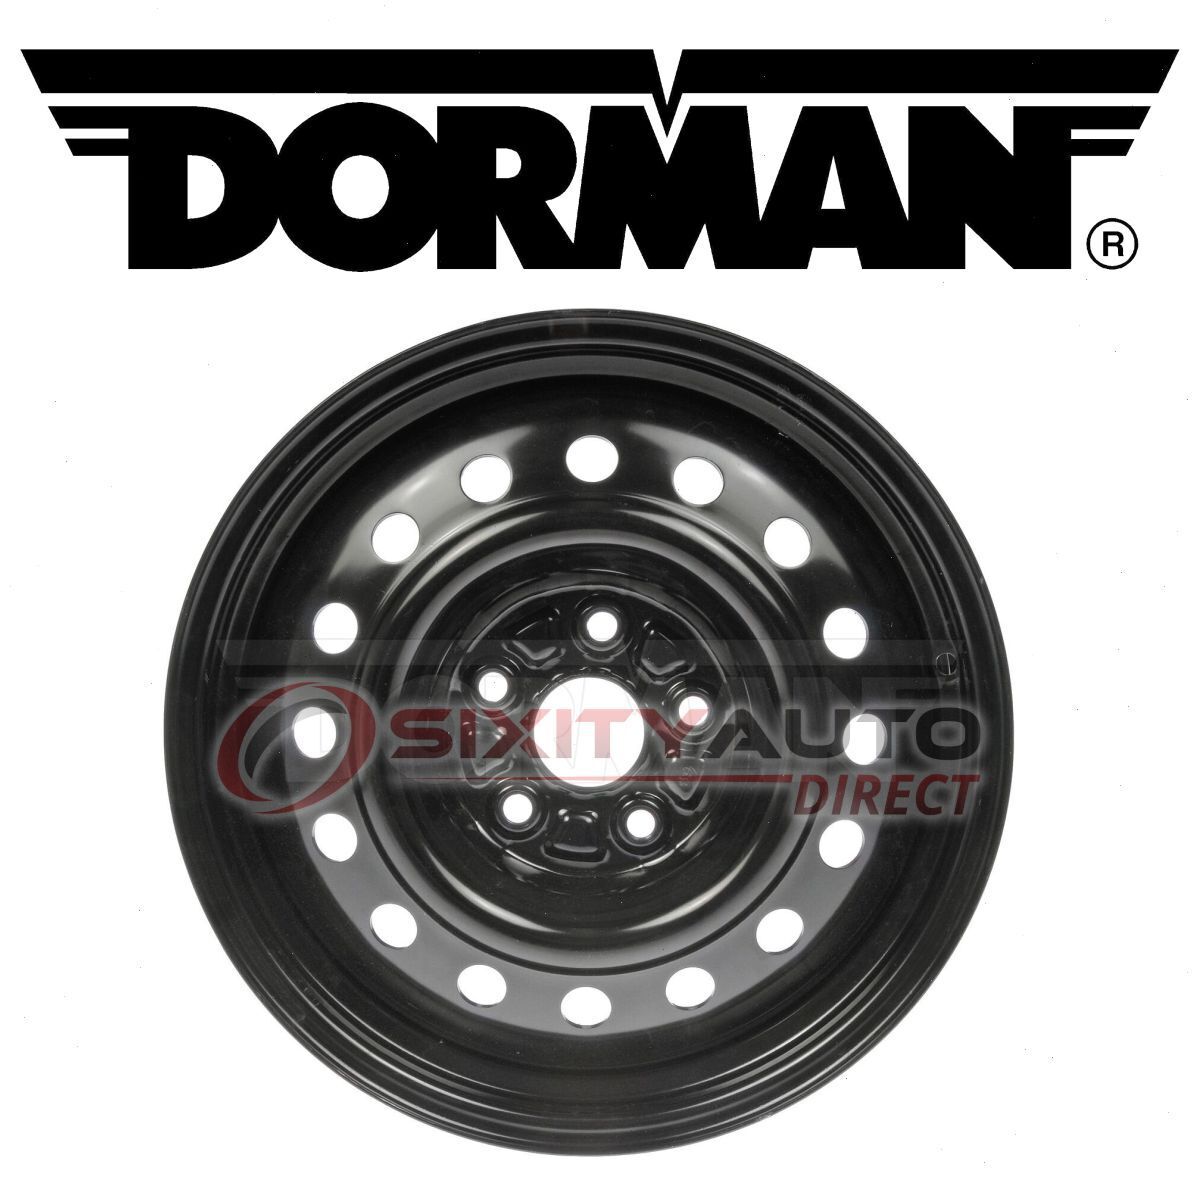 Dorman Wheel for 2005-2010 Volkswagen Bora 2.5L L5 Tire  lp